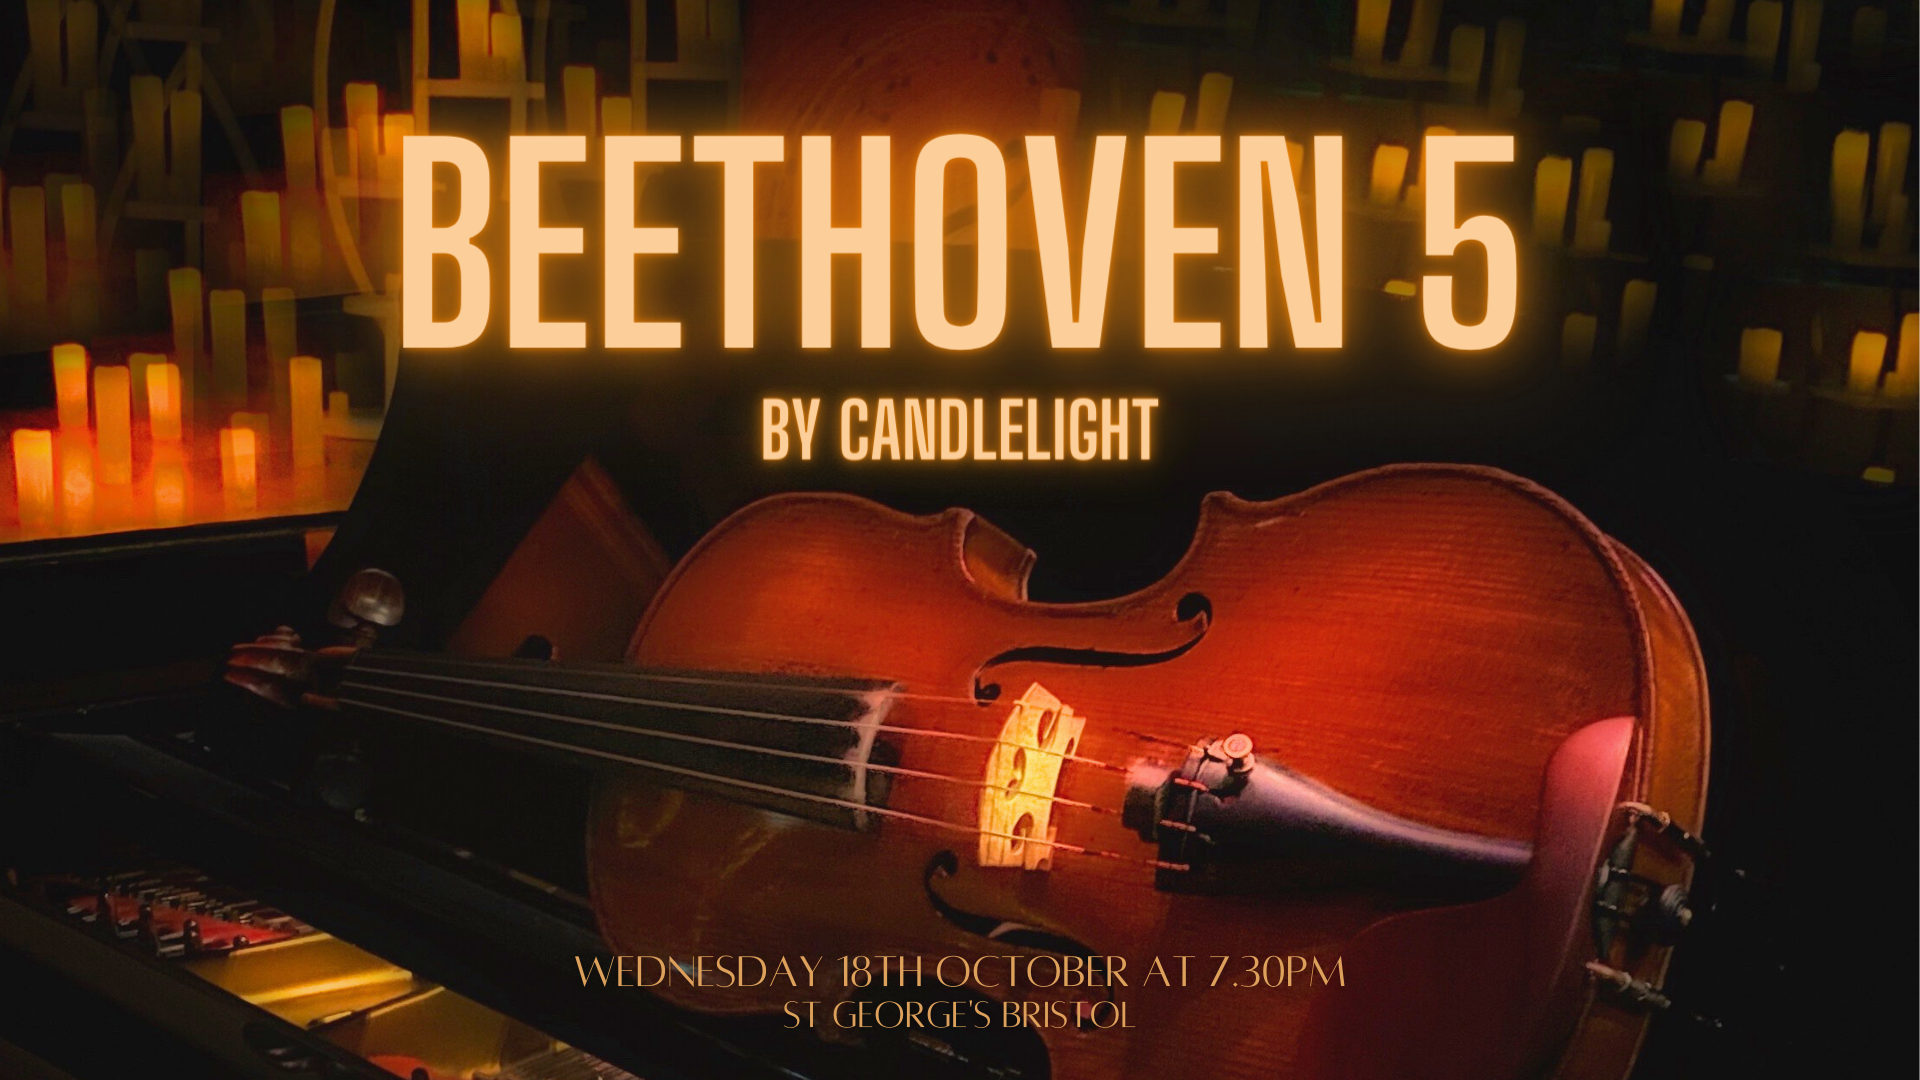 Beethoven 5 - 18 October